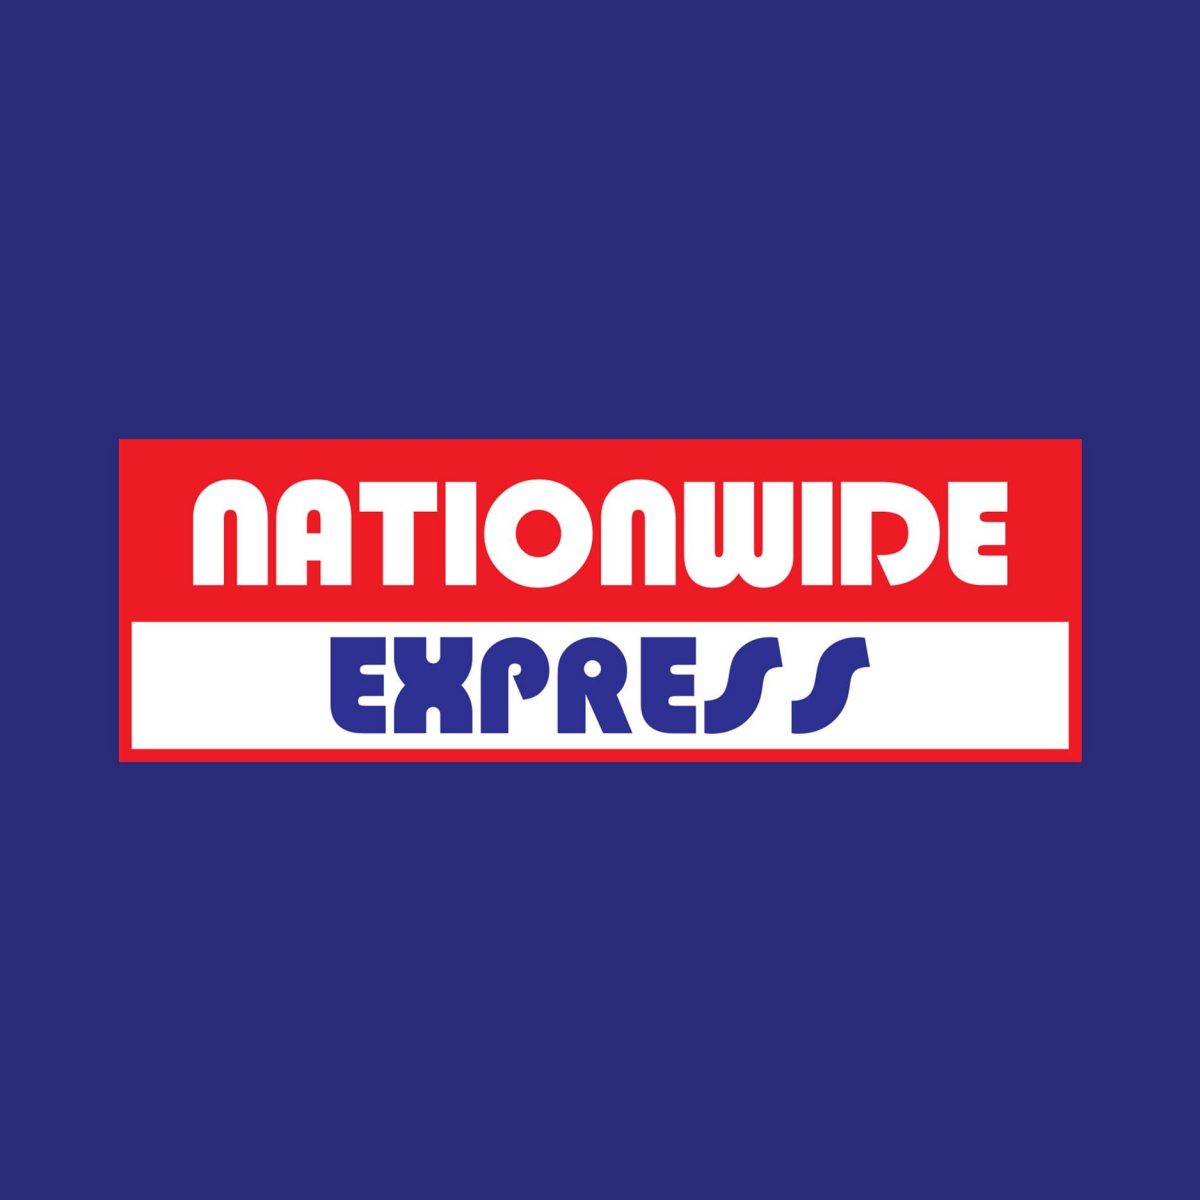 Nationwide Express
